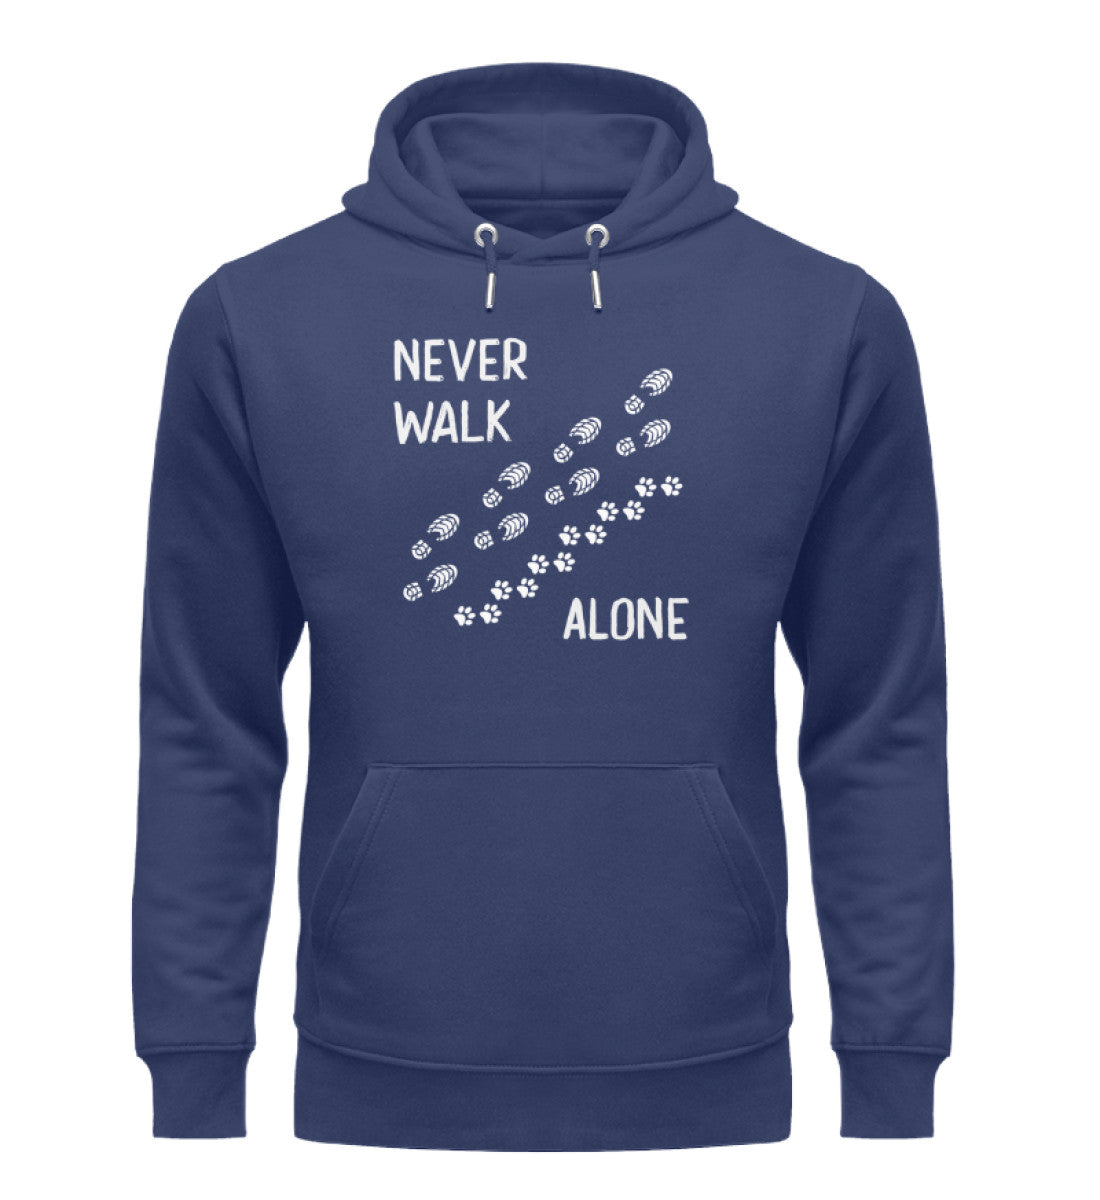 Never walk alone - Unisex Premium Organic Hoodie wandern Navyblau